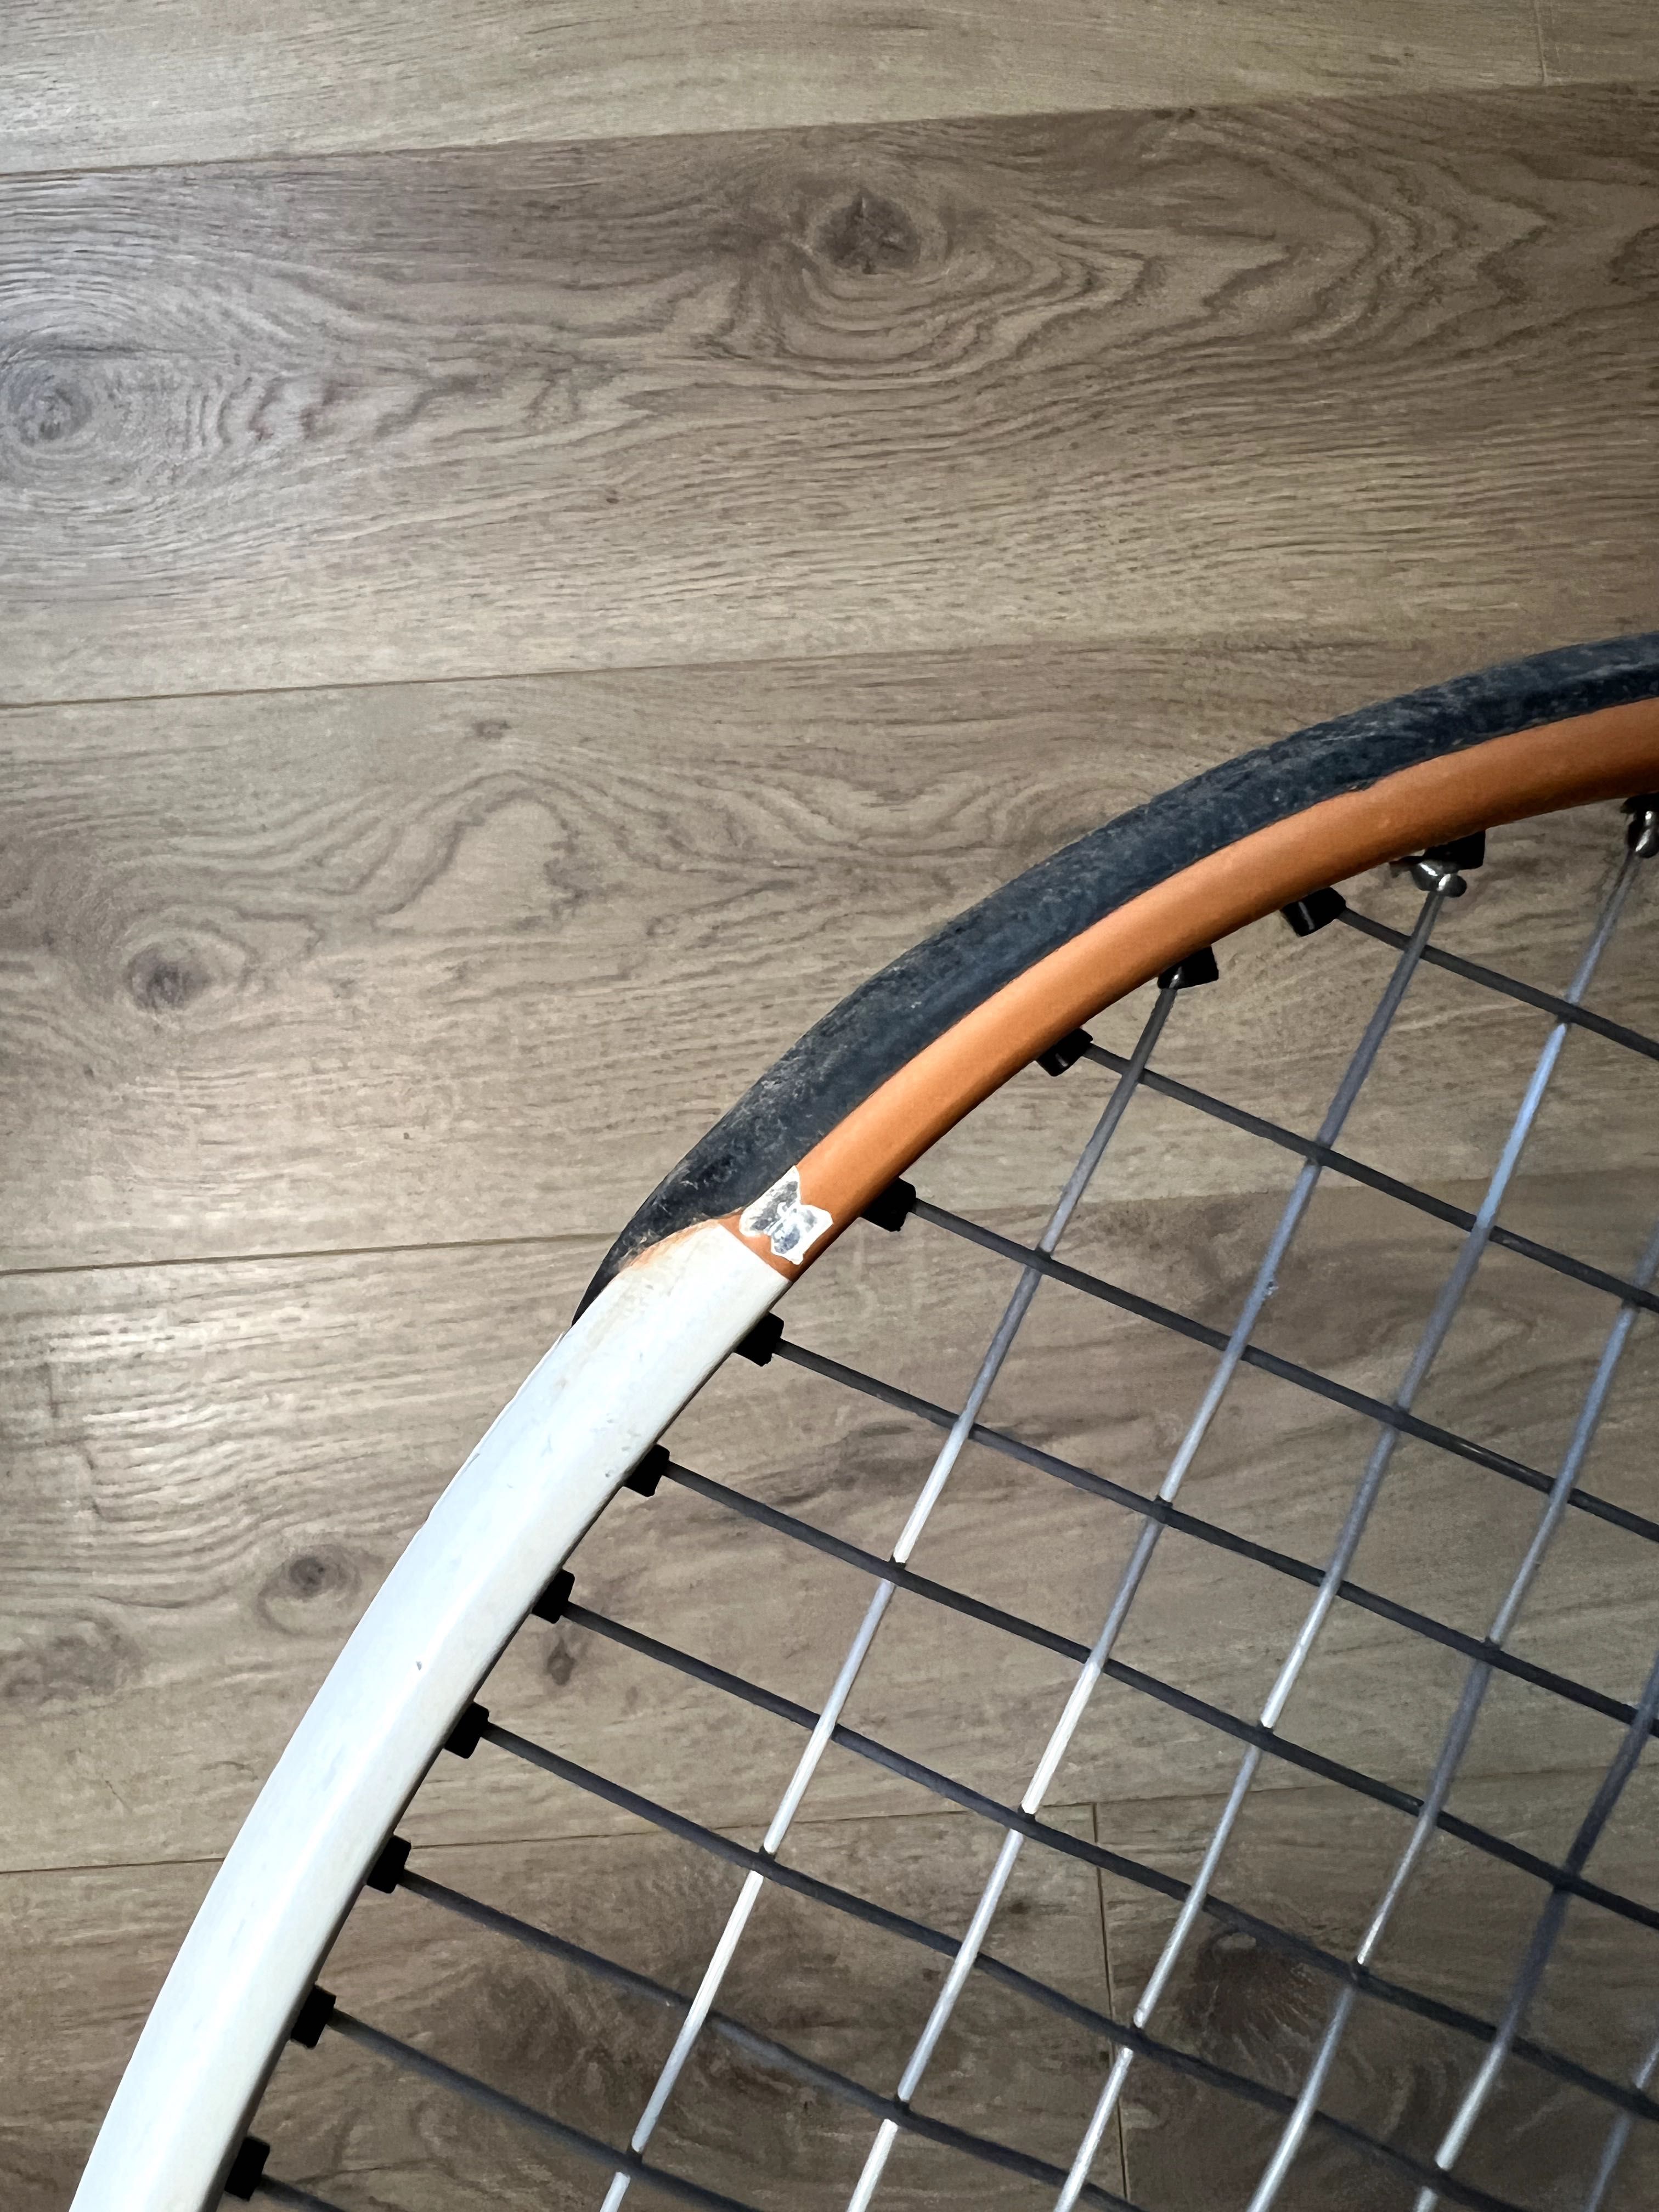 Тенис Ракета Wilson Blade 98 v7 Roland Garros (лимитирана версия)